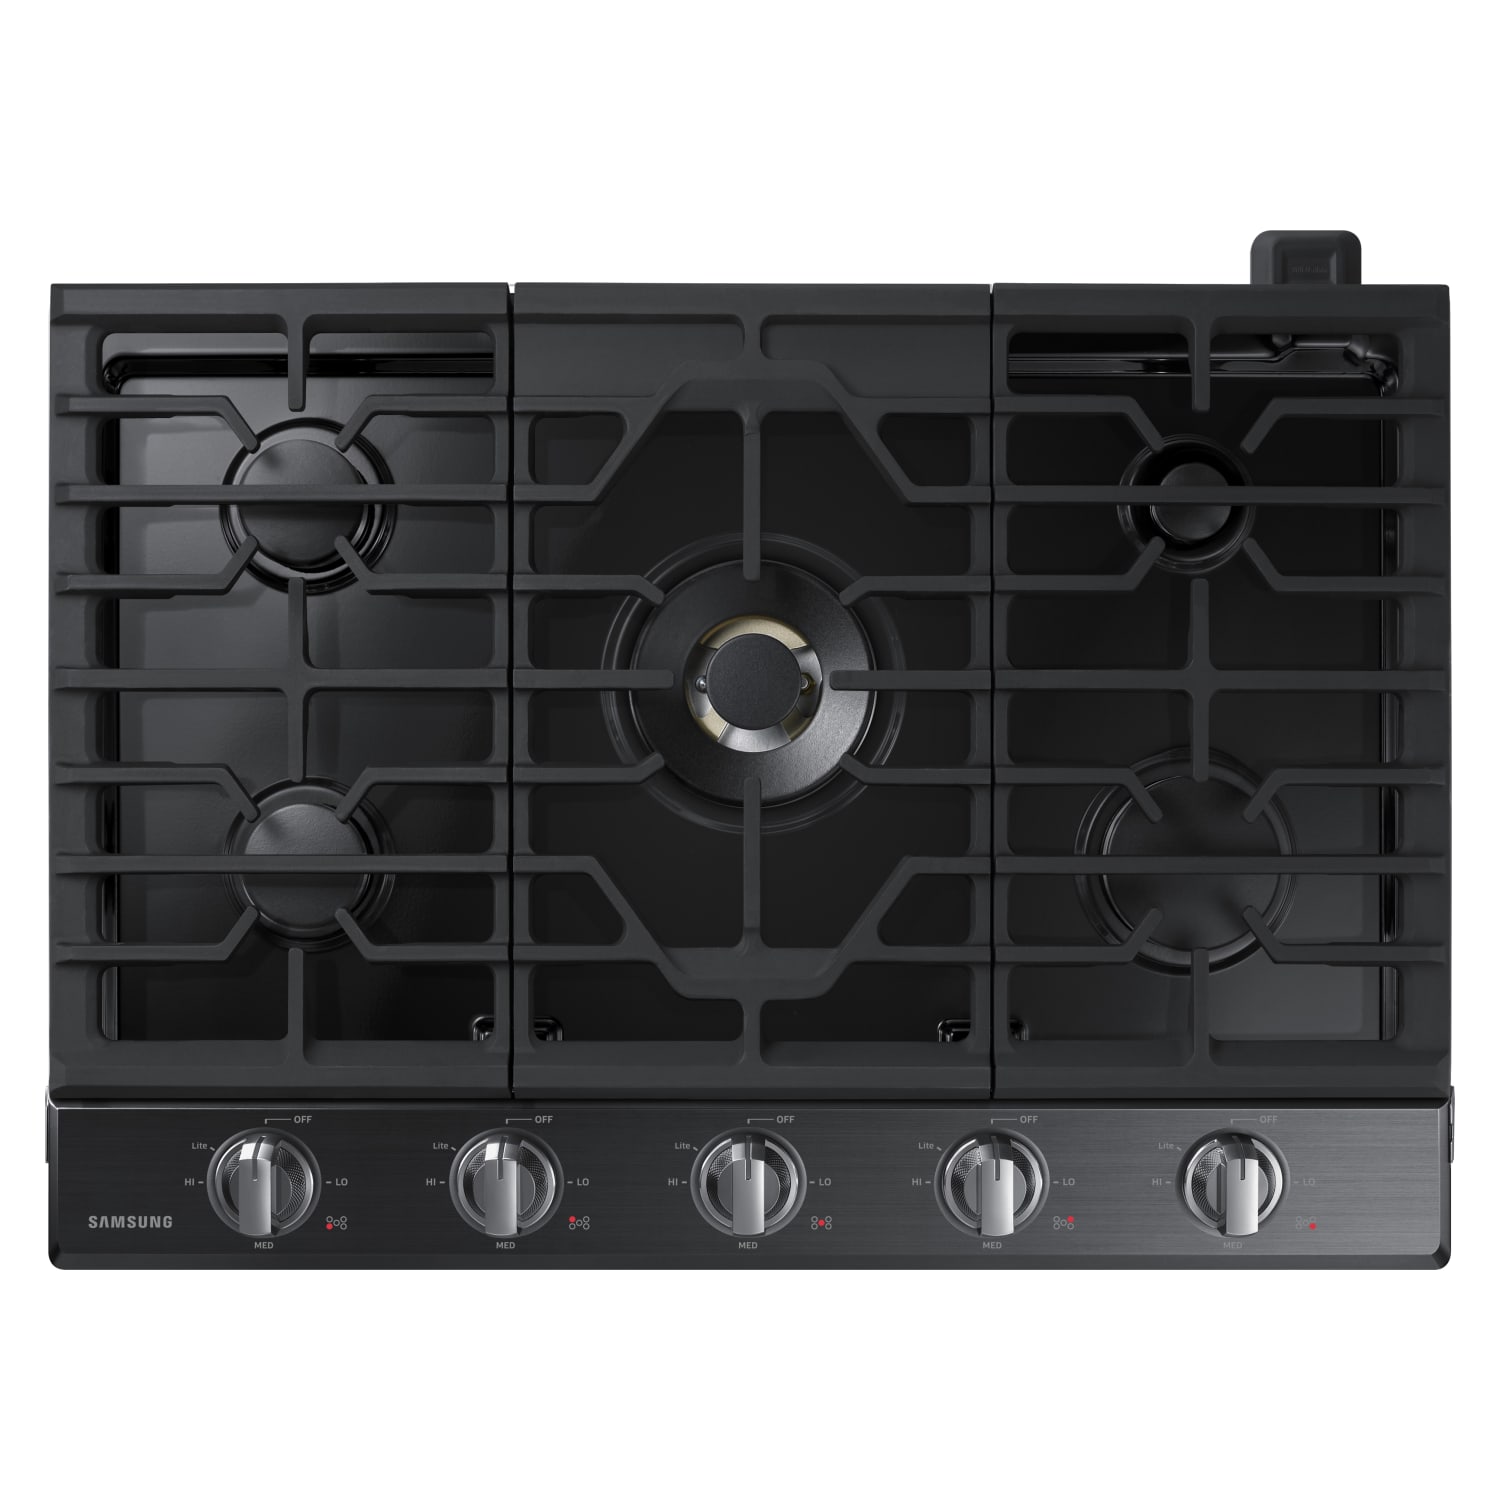 Samsung 30”, 5 Burner Cooktop in Fingerprint Resistant Black Stainless Steel - NA30N7755TG